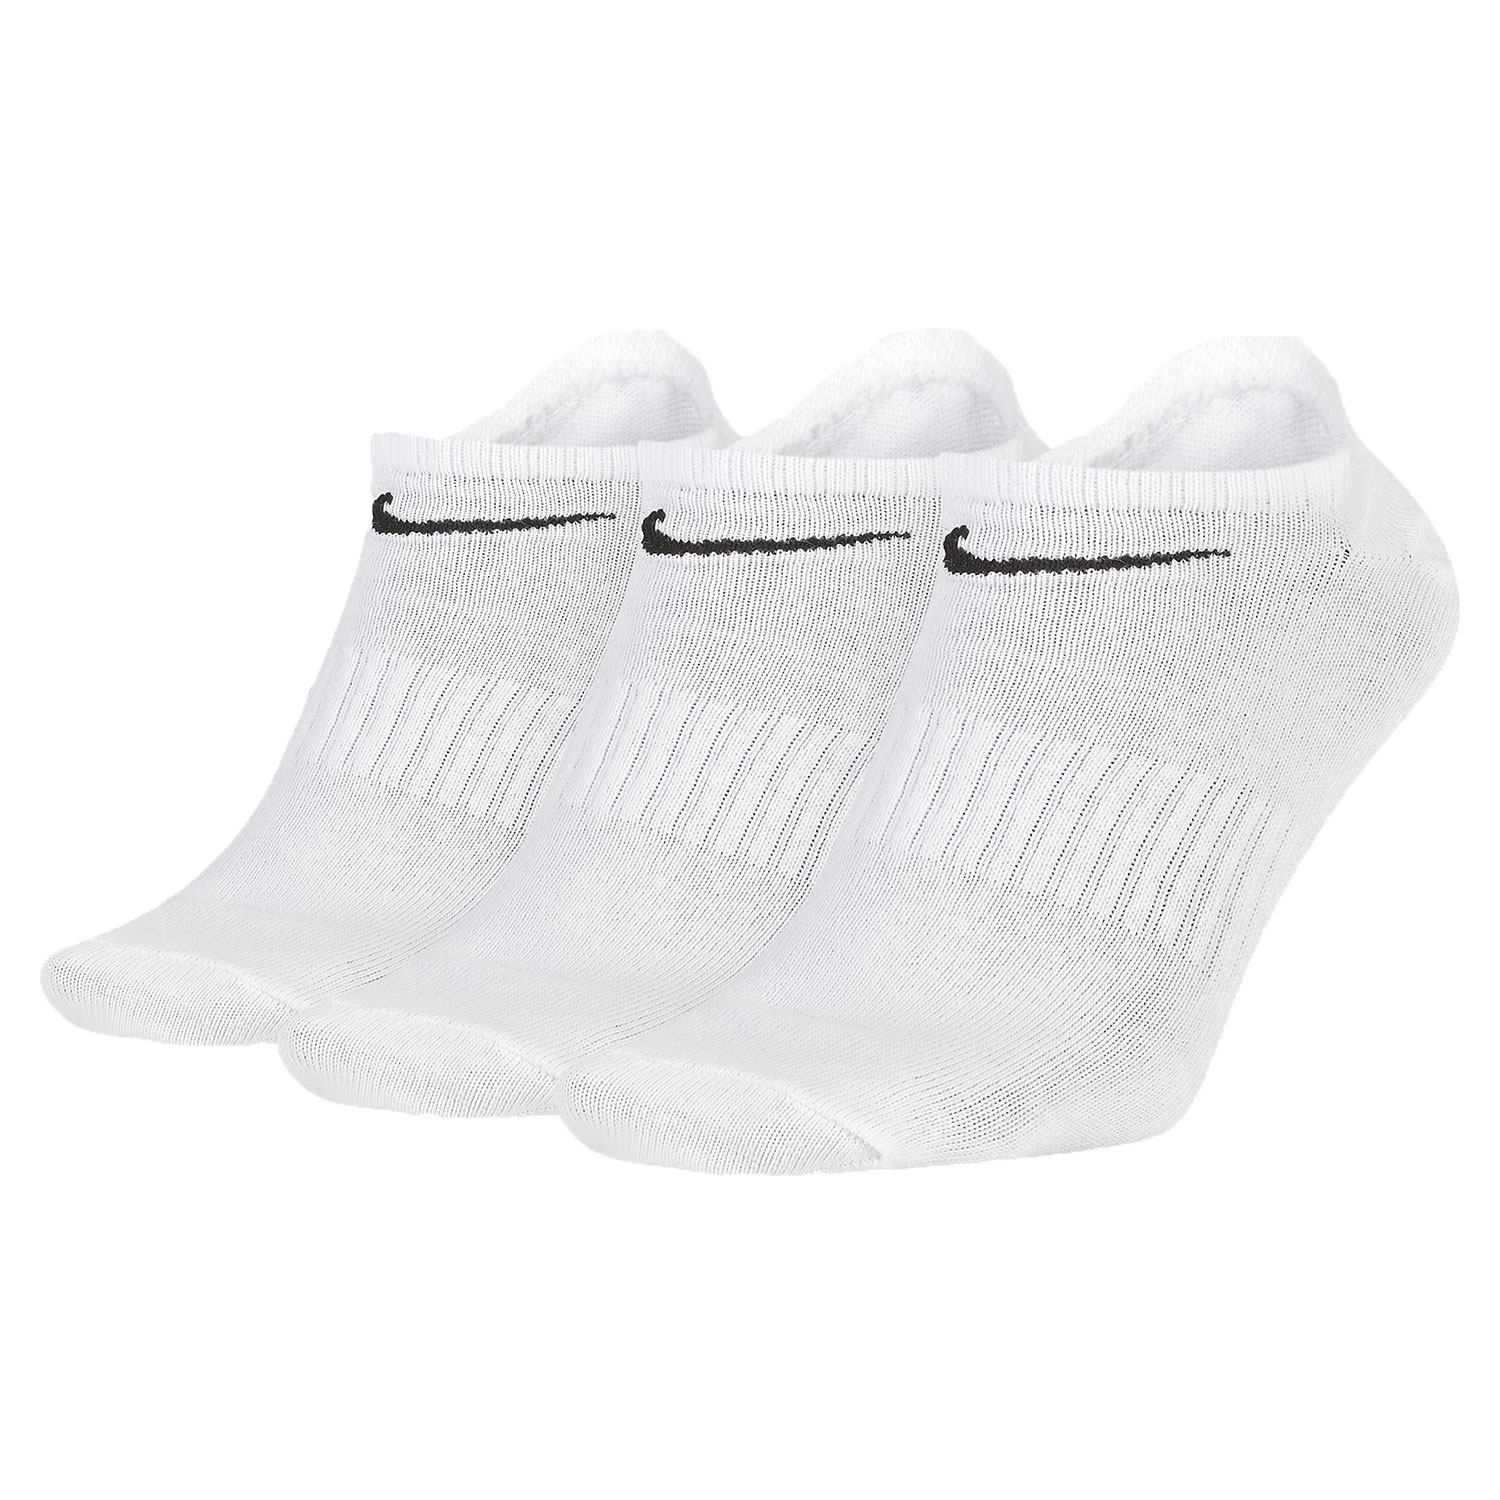 Nike Everyday Lightweight x 3 Socks - White/Black